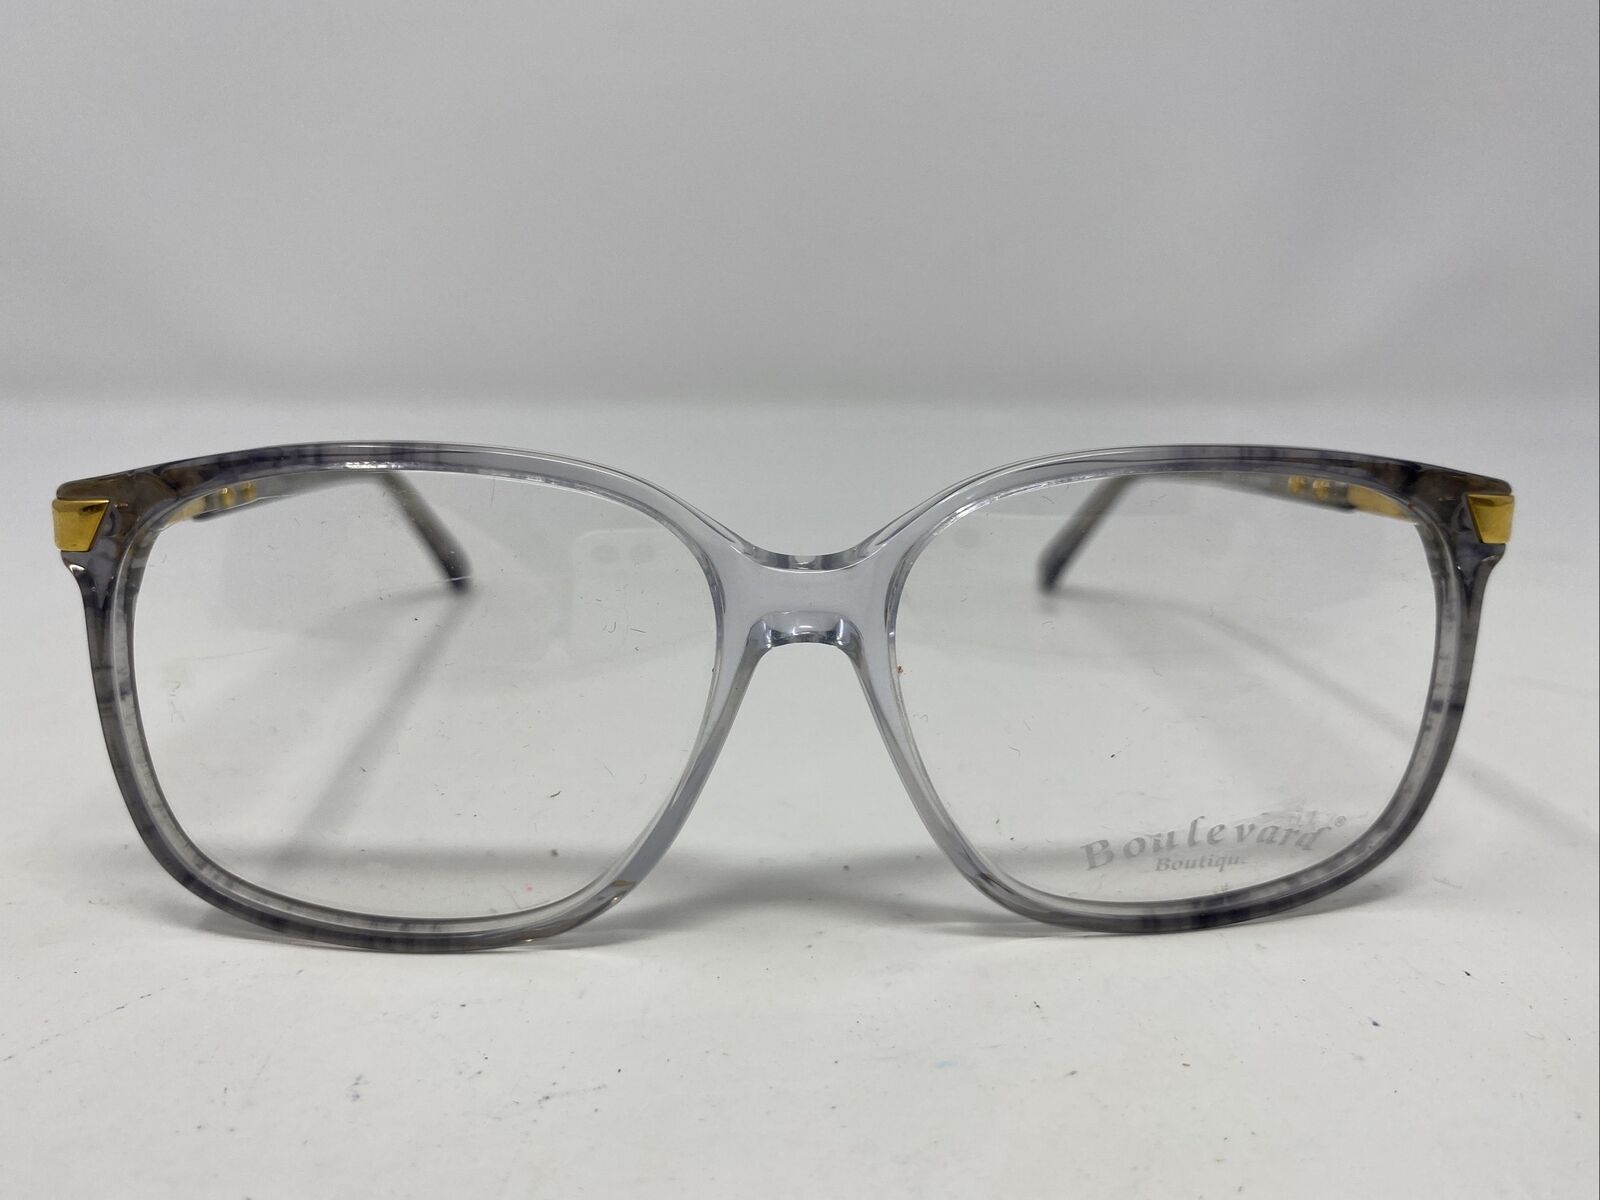 Boulevard Boutique 1106 GREY FADE 56-17-145 Full Rim Eyeglasses Frame /R18